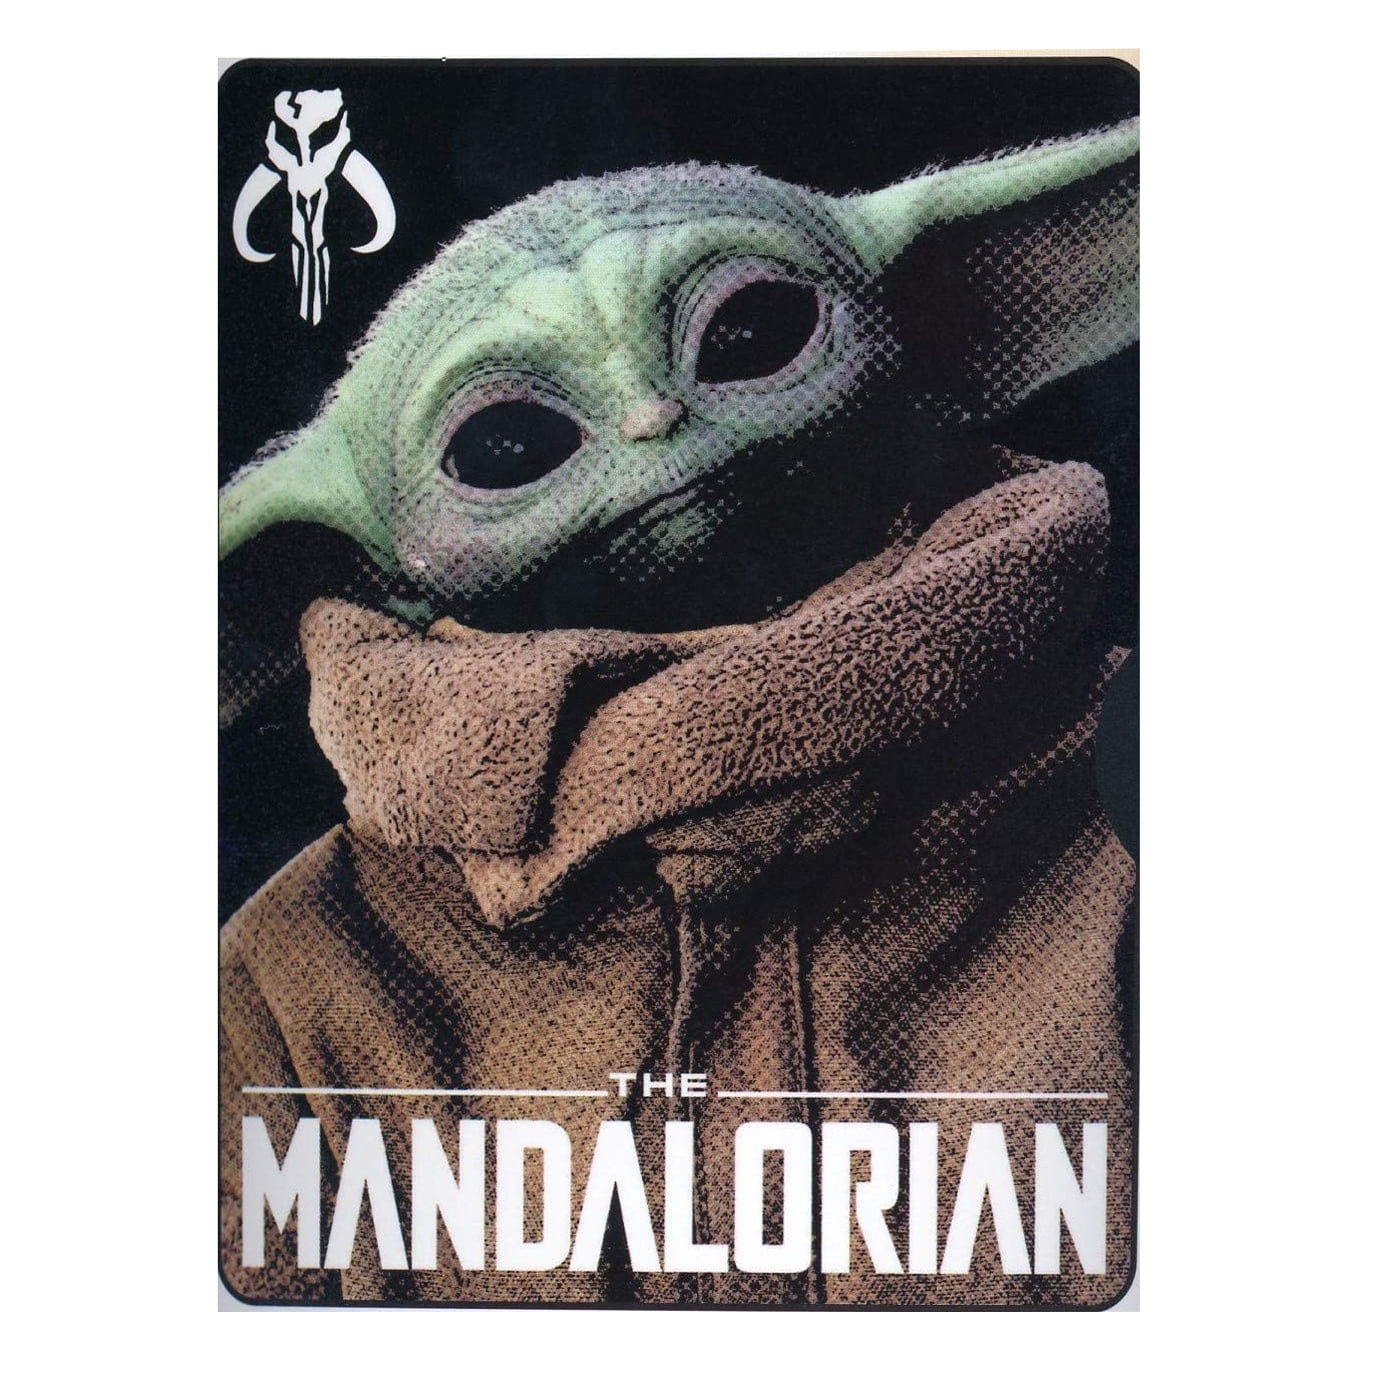 The Big One Star Wars Mandalorian The Child Baby Yoda Grugo 